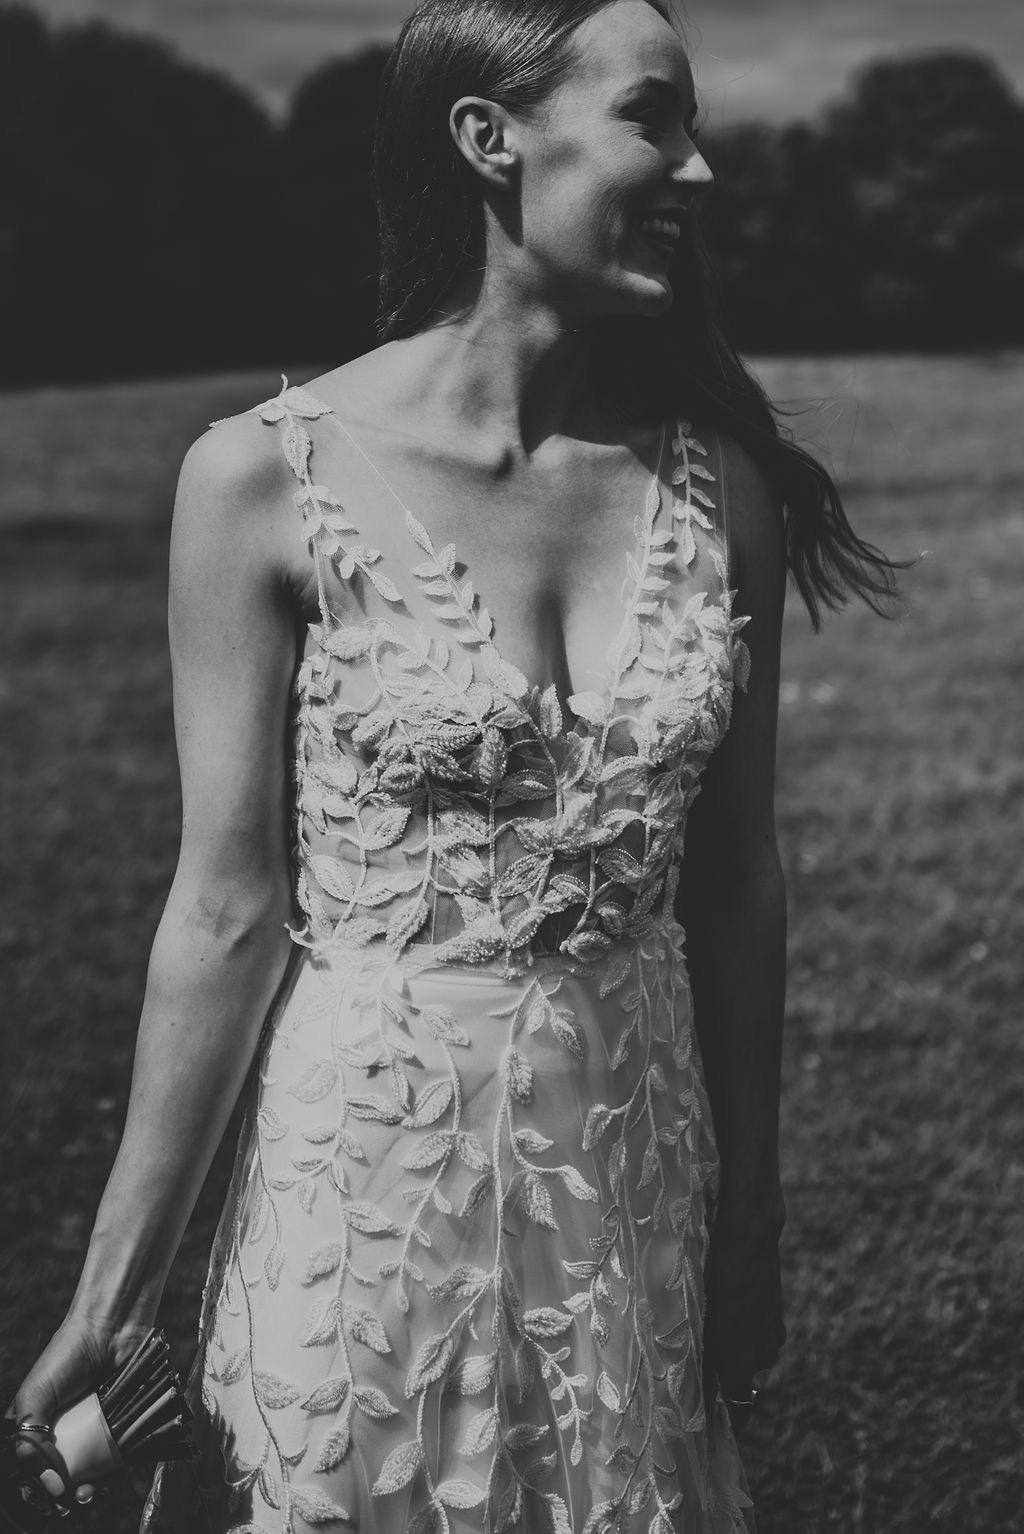 Macy // Beaded Leaf Design Wedding Dress